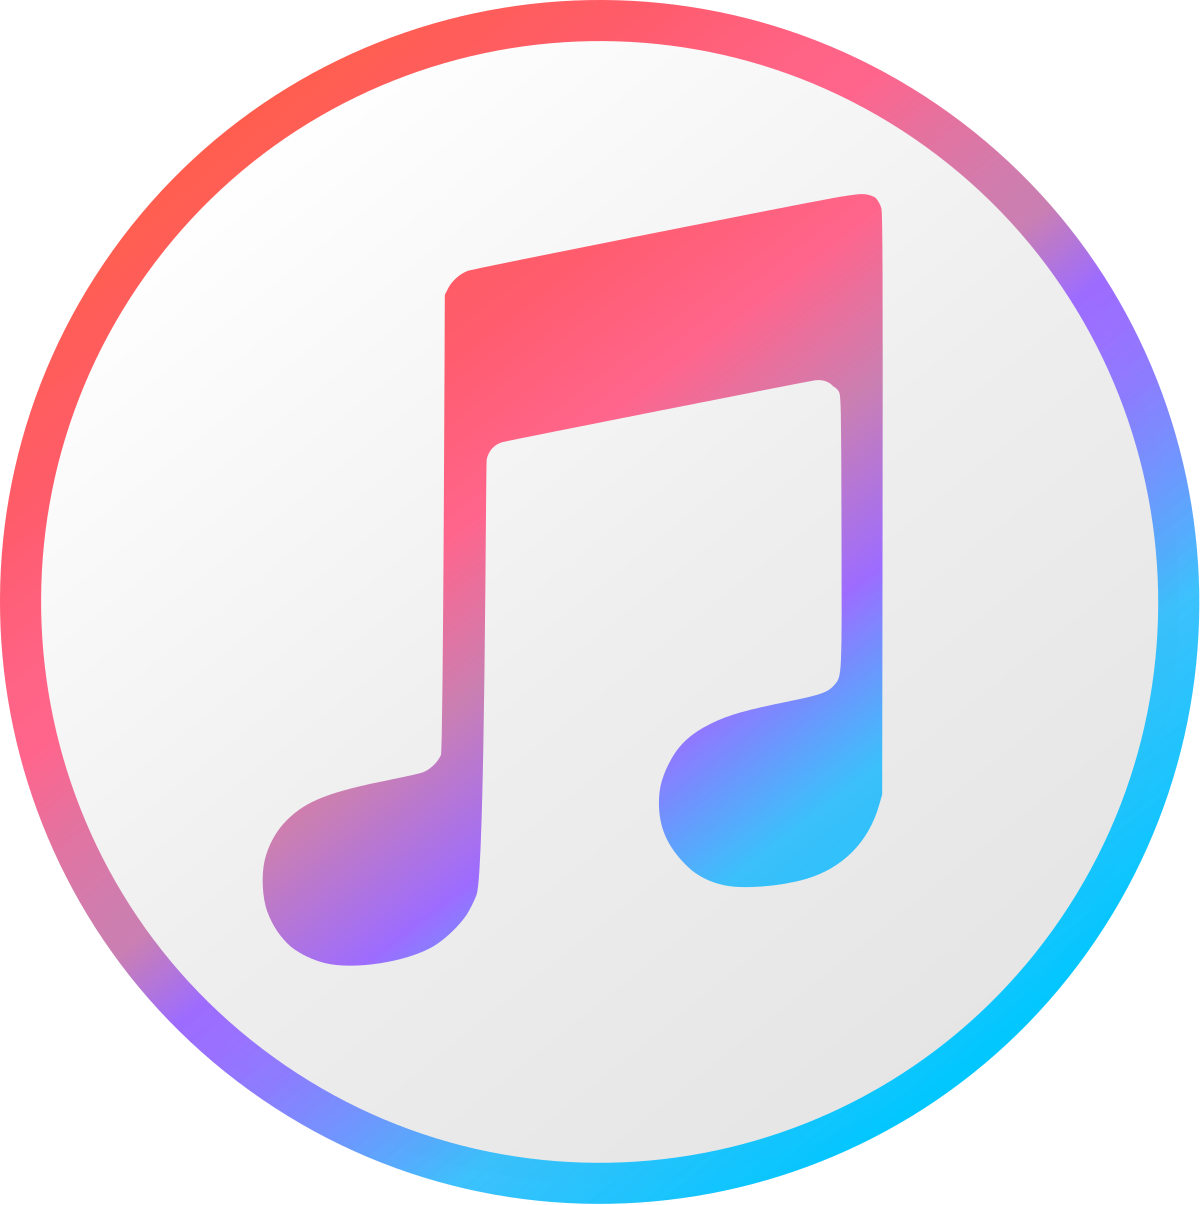 Music 03. Иконка Apple Music. Значок Эппл Мьюзик. Значок музыки. Музыка иконка.